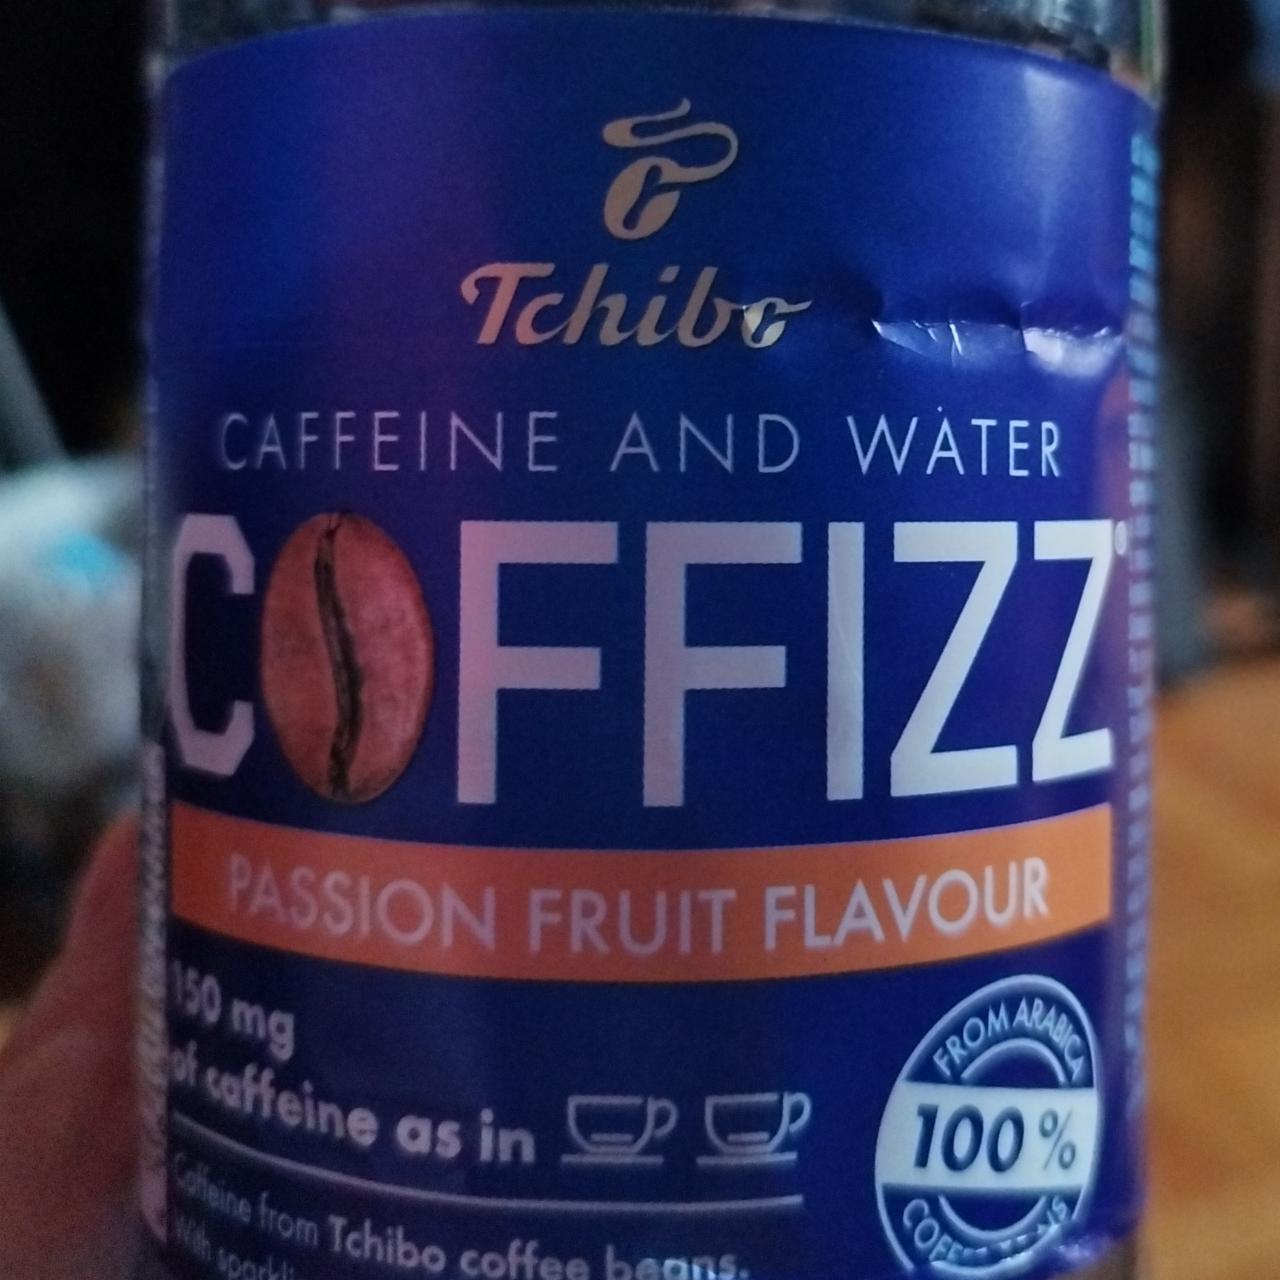 Fotografie - Caffeine and water Coffizz Passion fruit flavour Tchibo